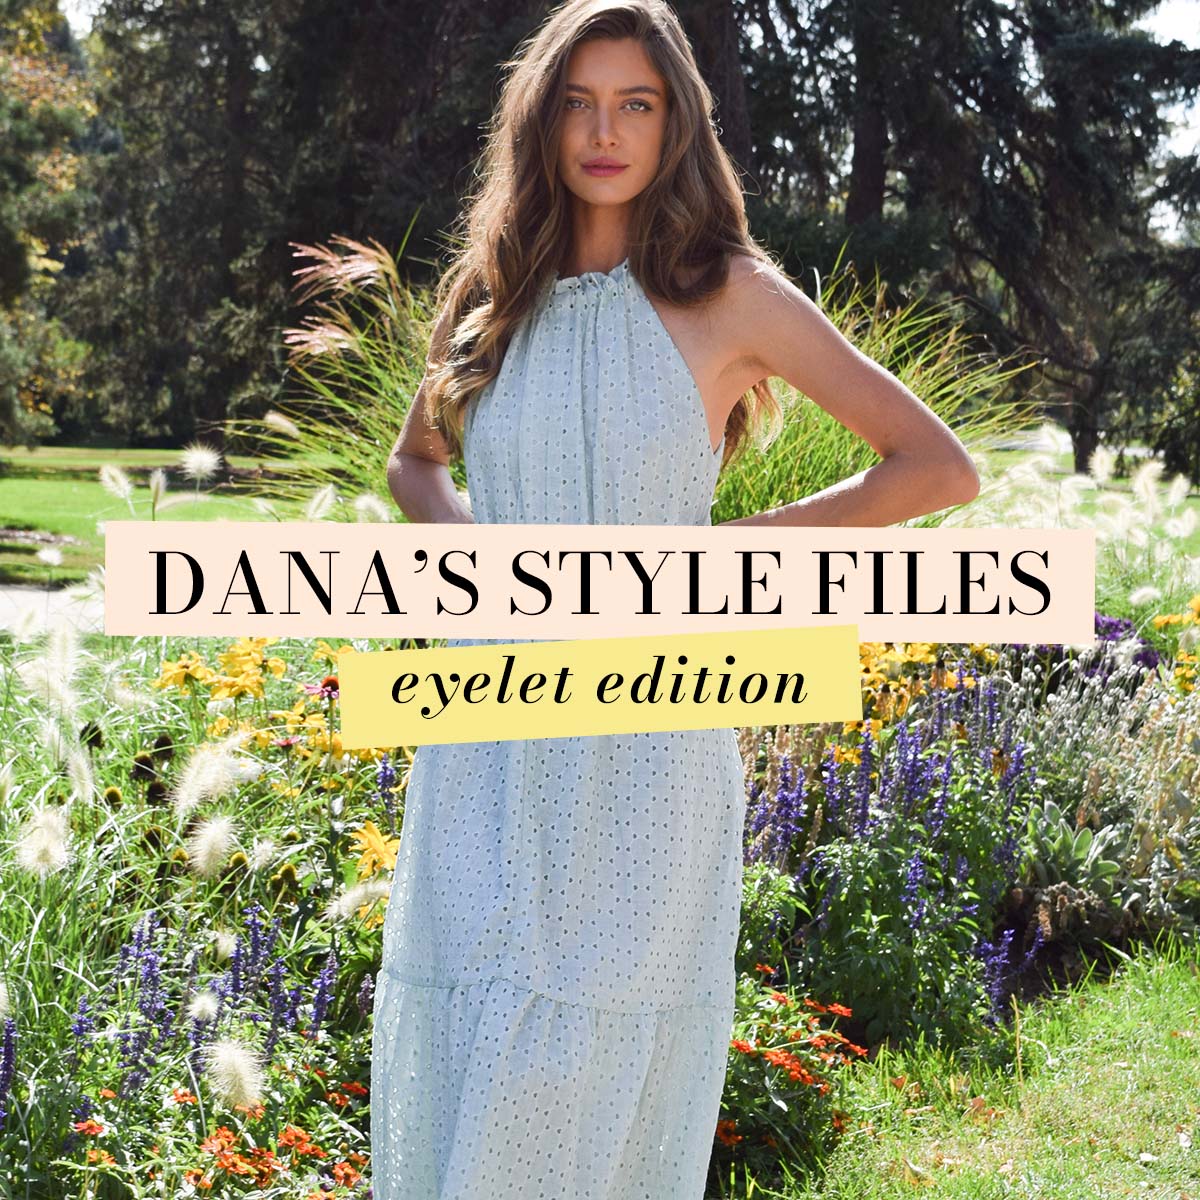 Styled by Dana: Seafoam Eyelet